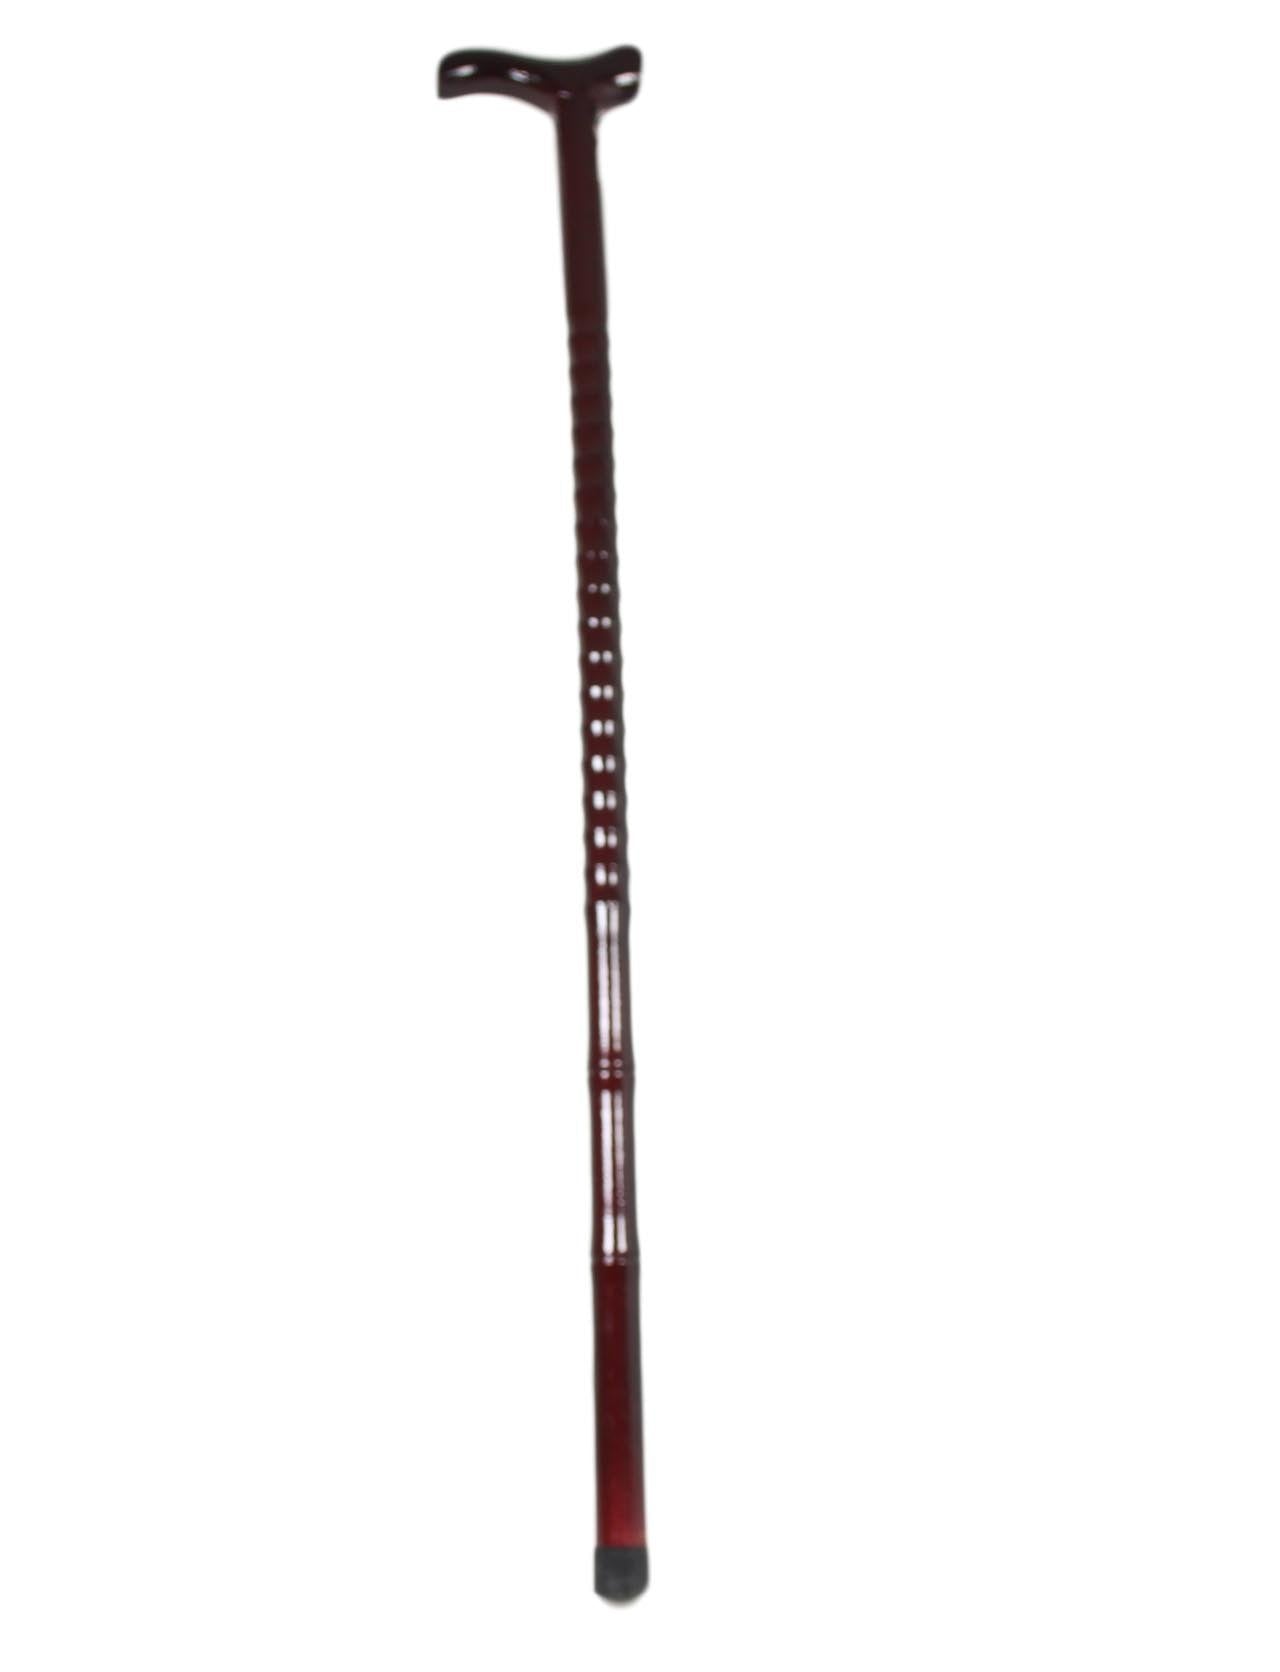 Wooden Walking Cane Stick 90 cm Light Wooden Brown 2839 A (Parcel Rate)